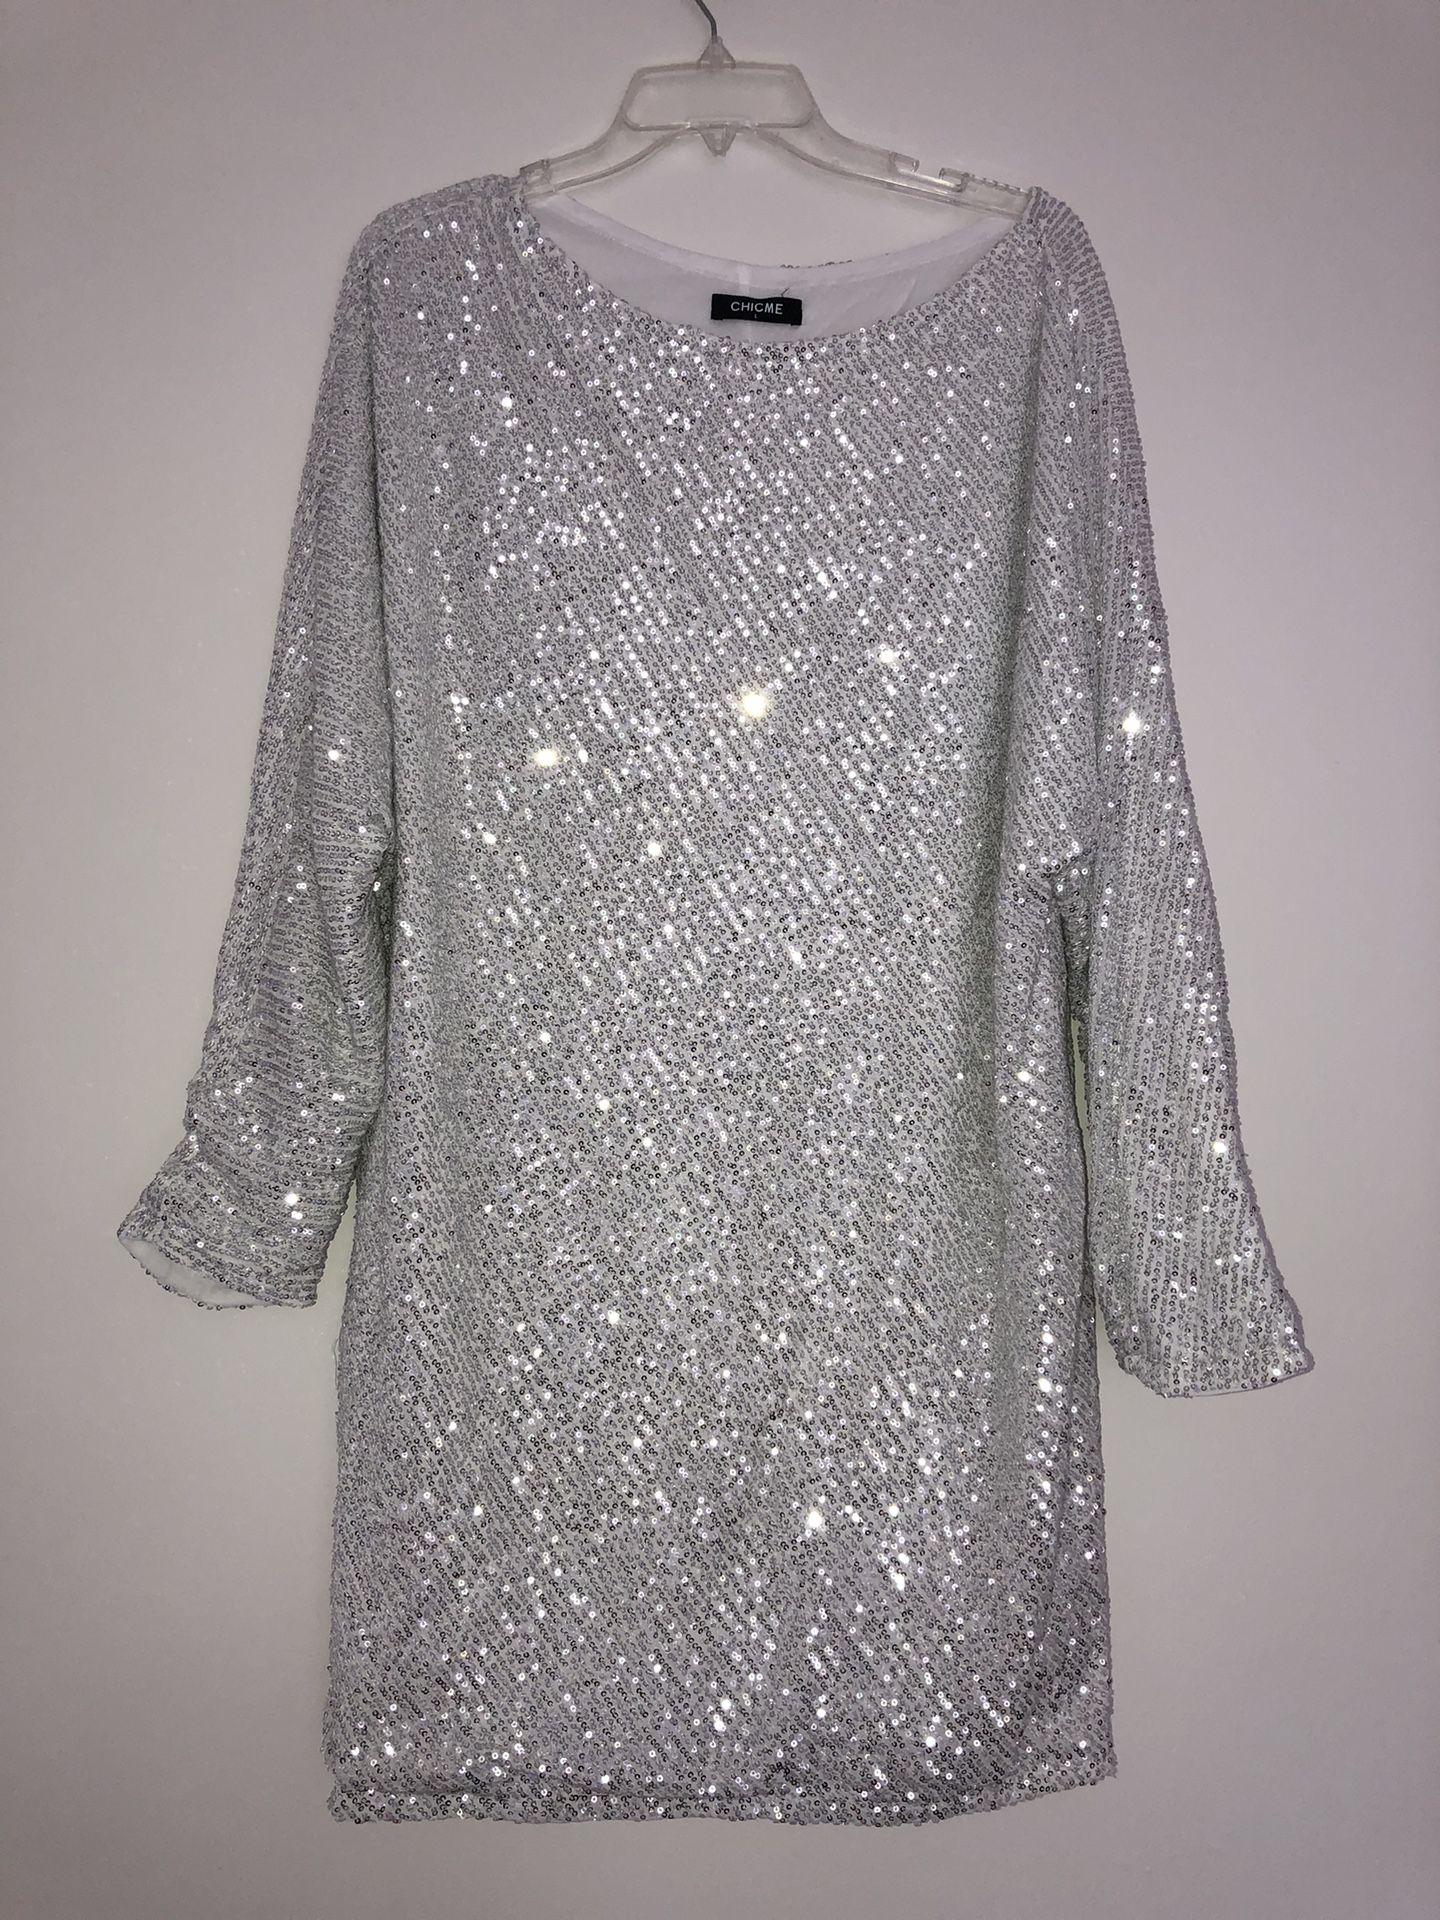 CHiCME Silver Sequin Dress